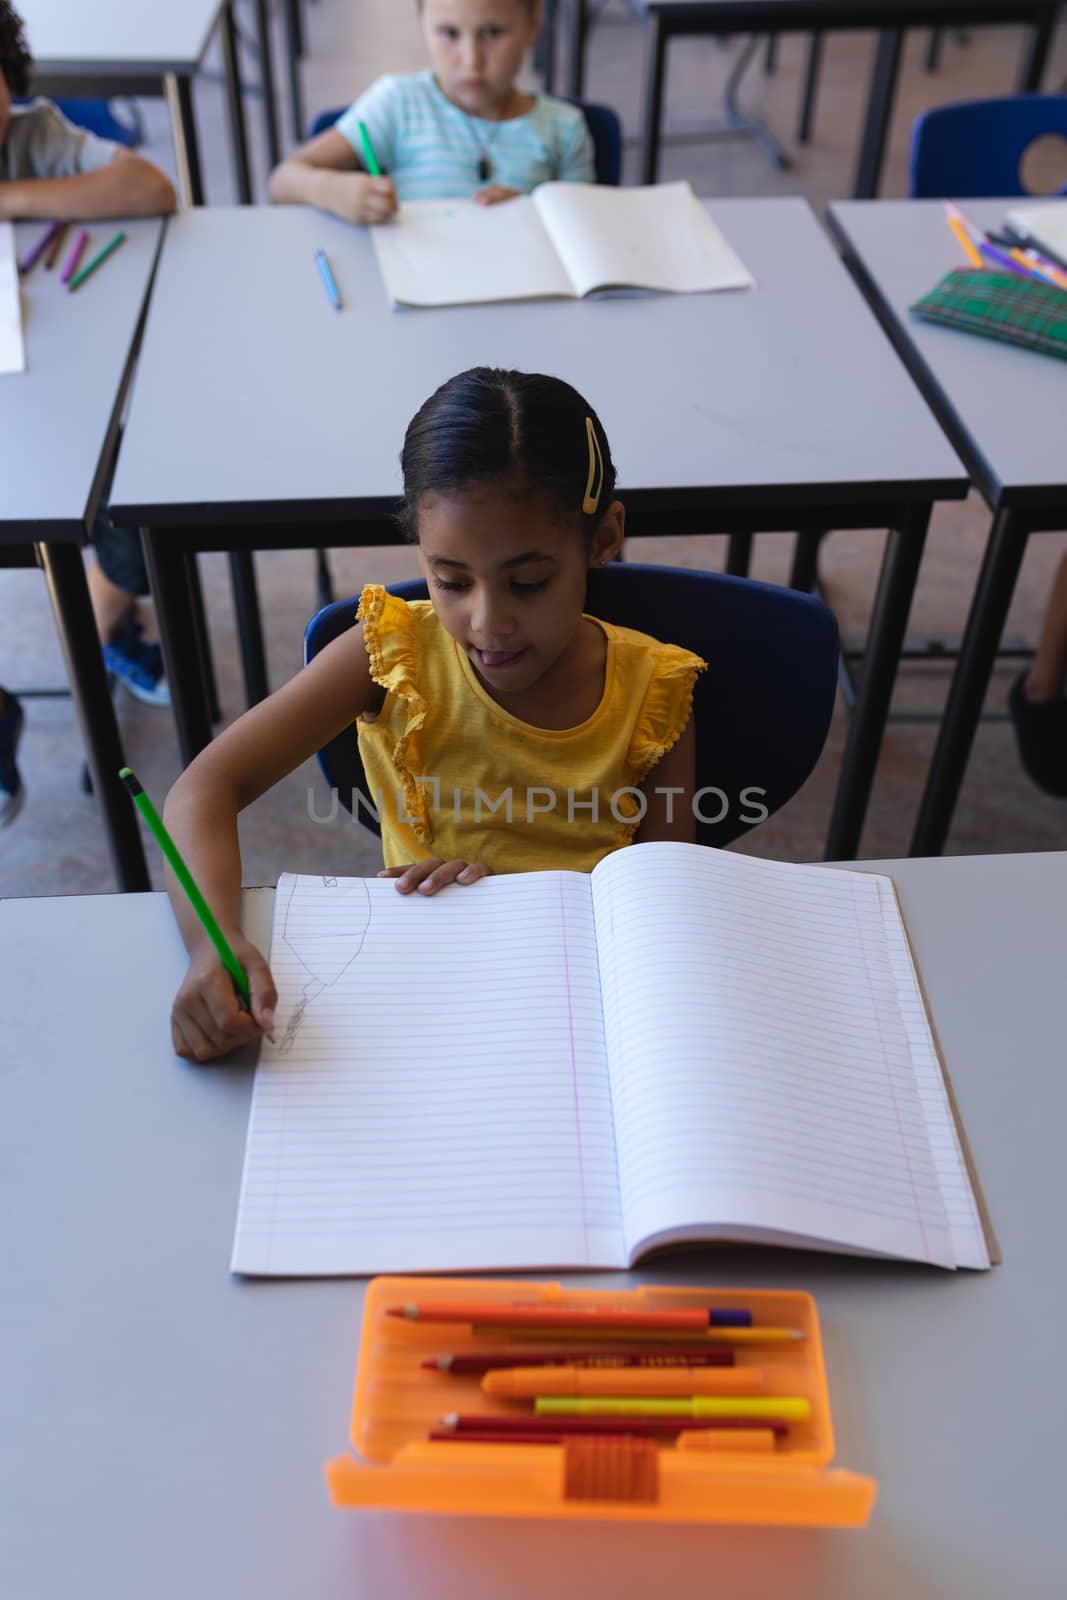 Schoolgirl writing on notebook at desk in classroom by Wavebreakmedia